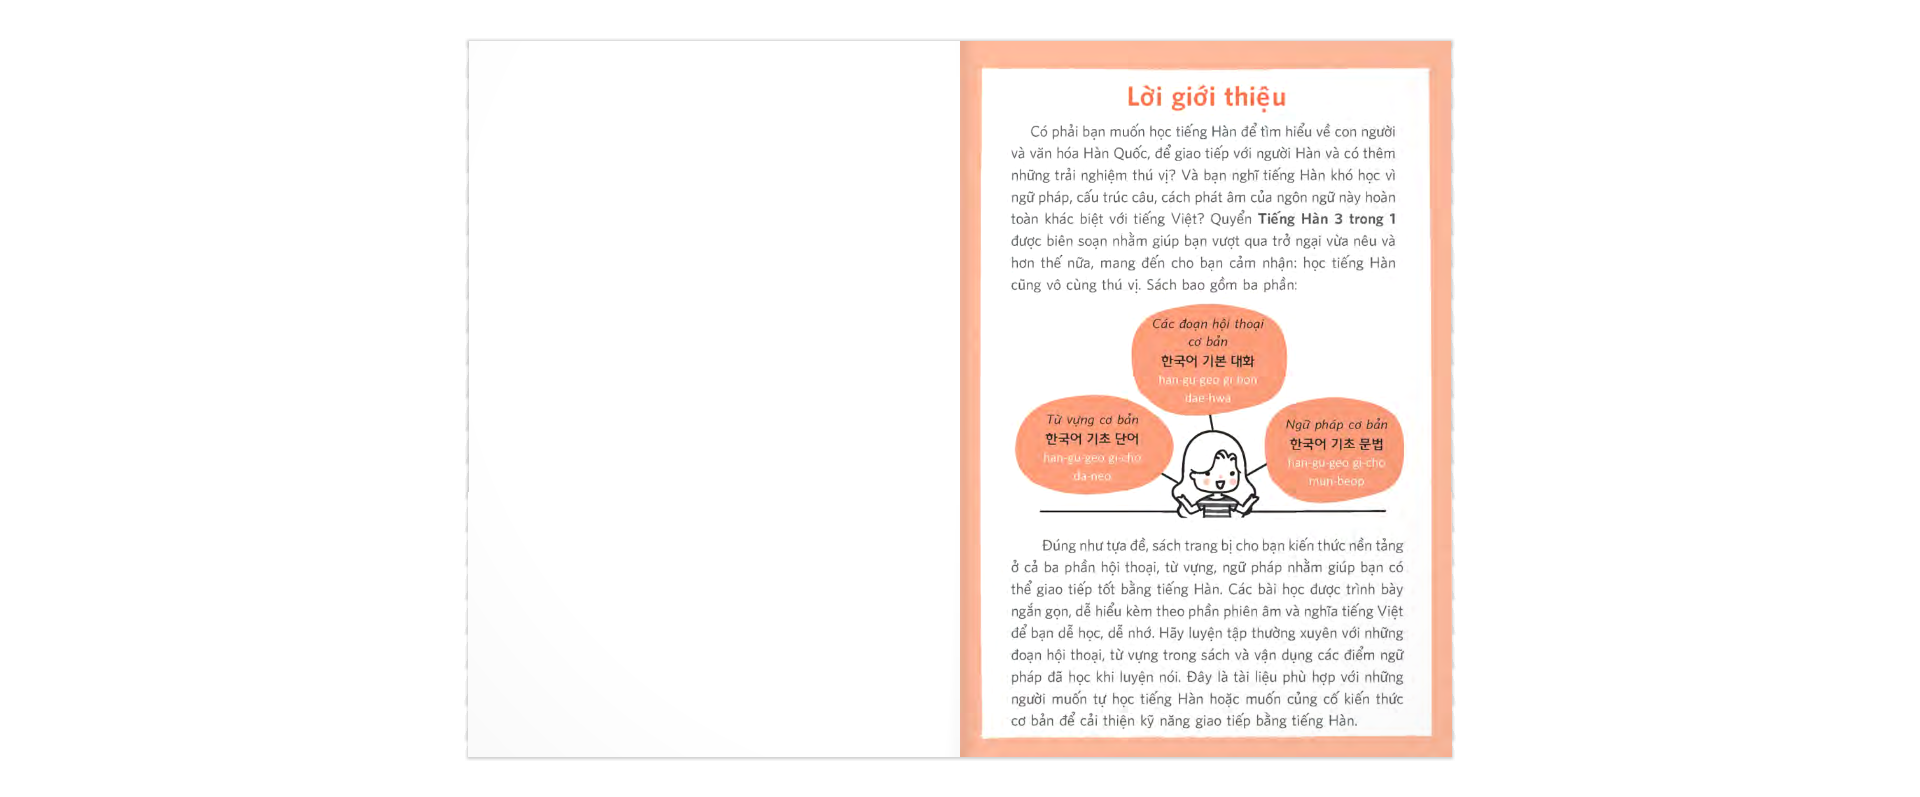 All-In-One Korean - Tiếng Hàn 3 Trong 1 PDF